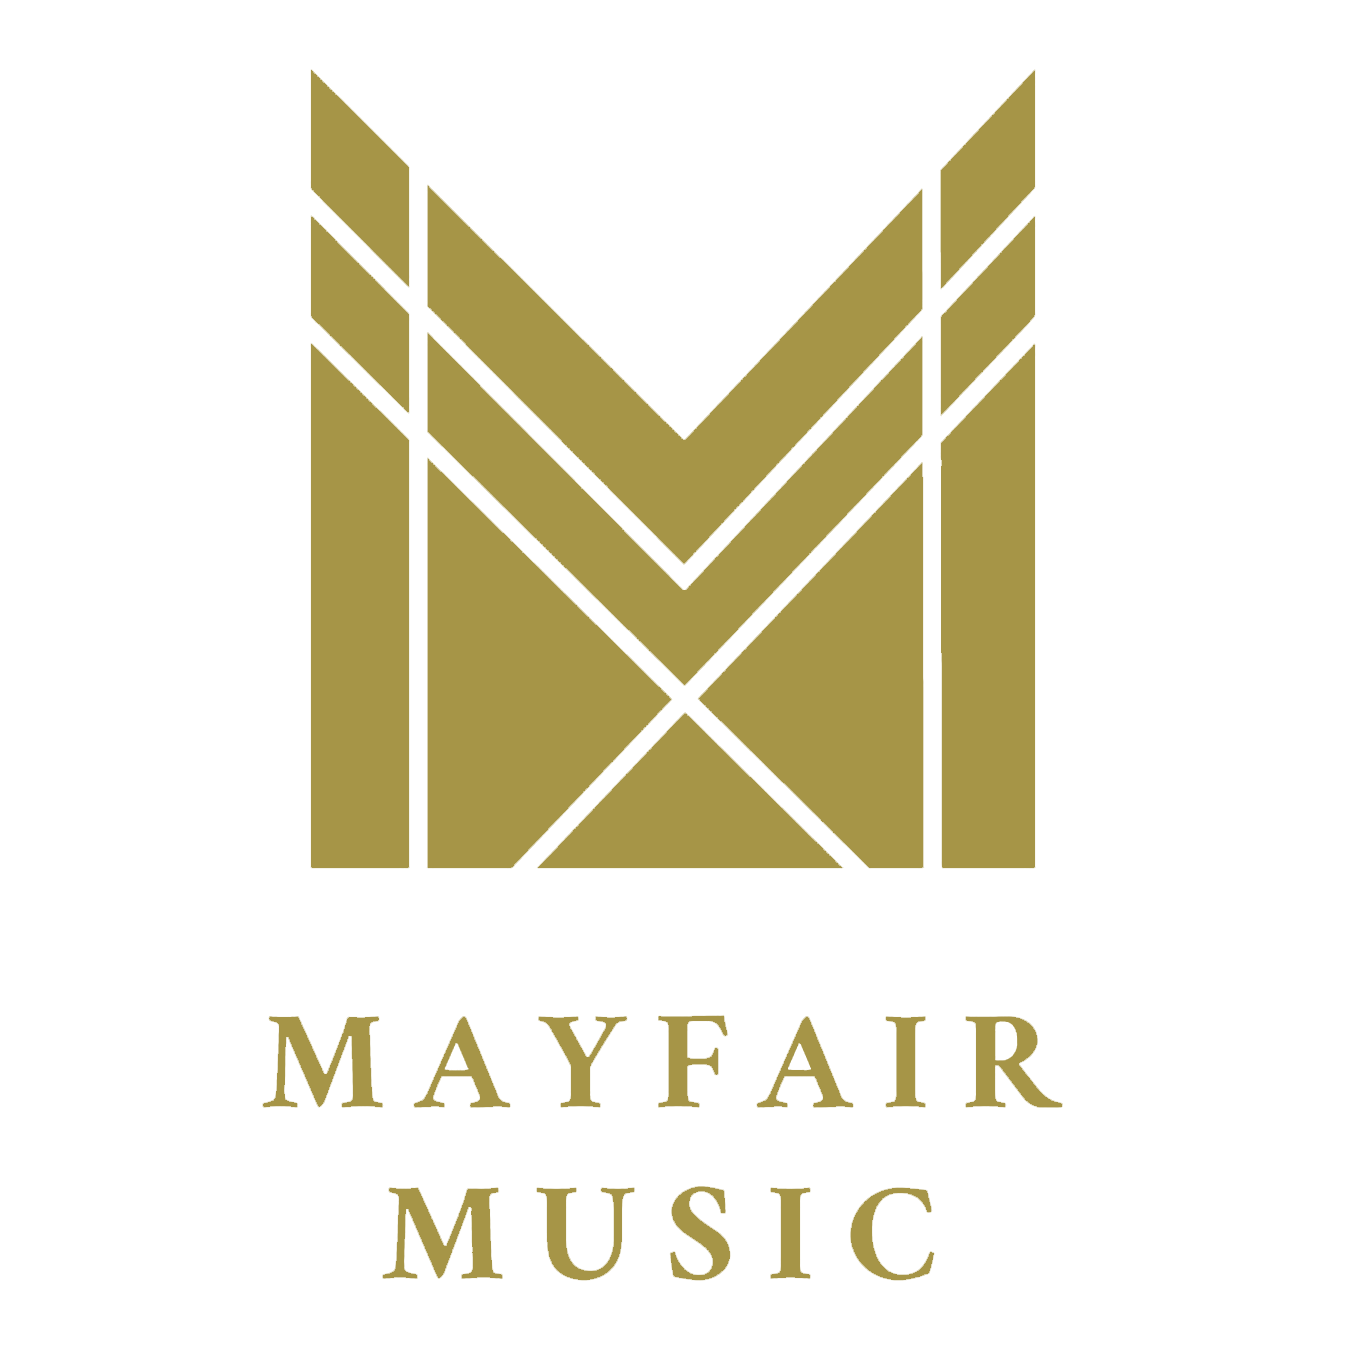 mm-logo-gold.png